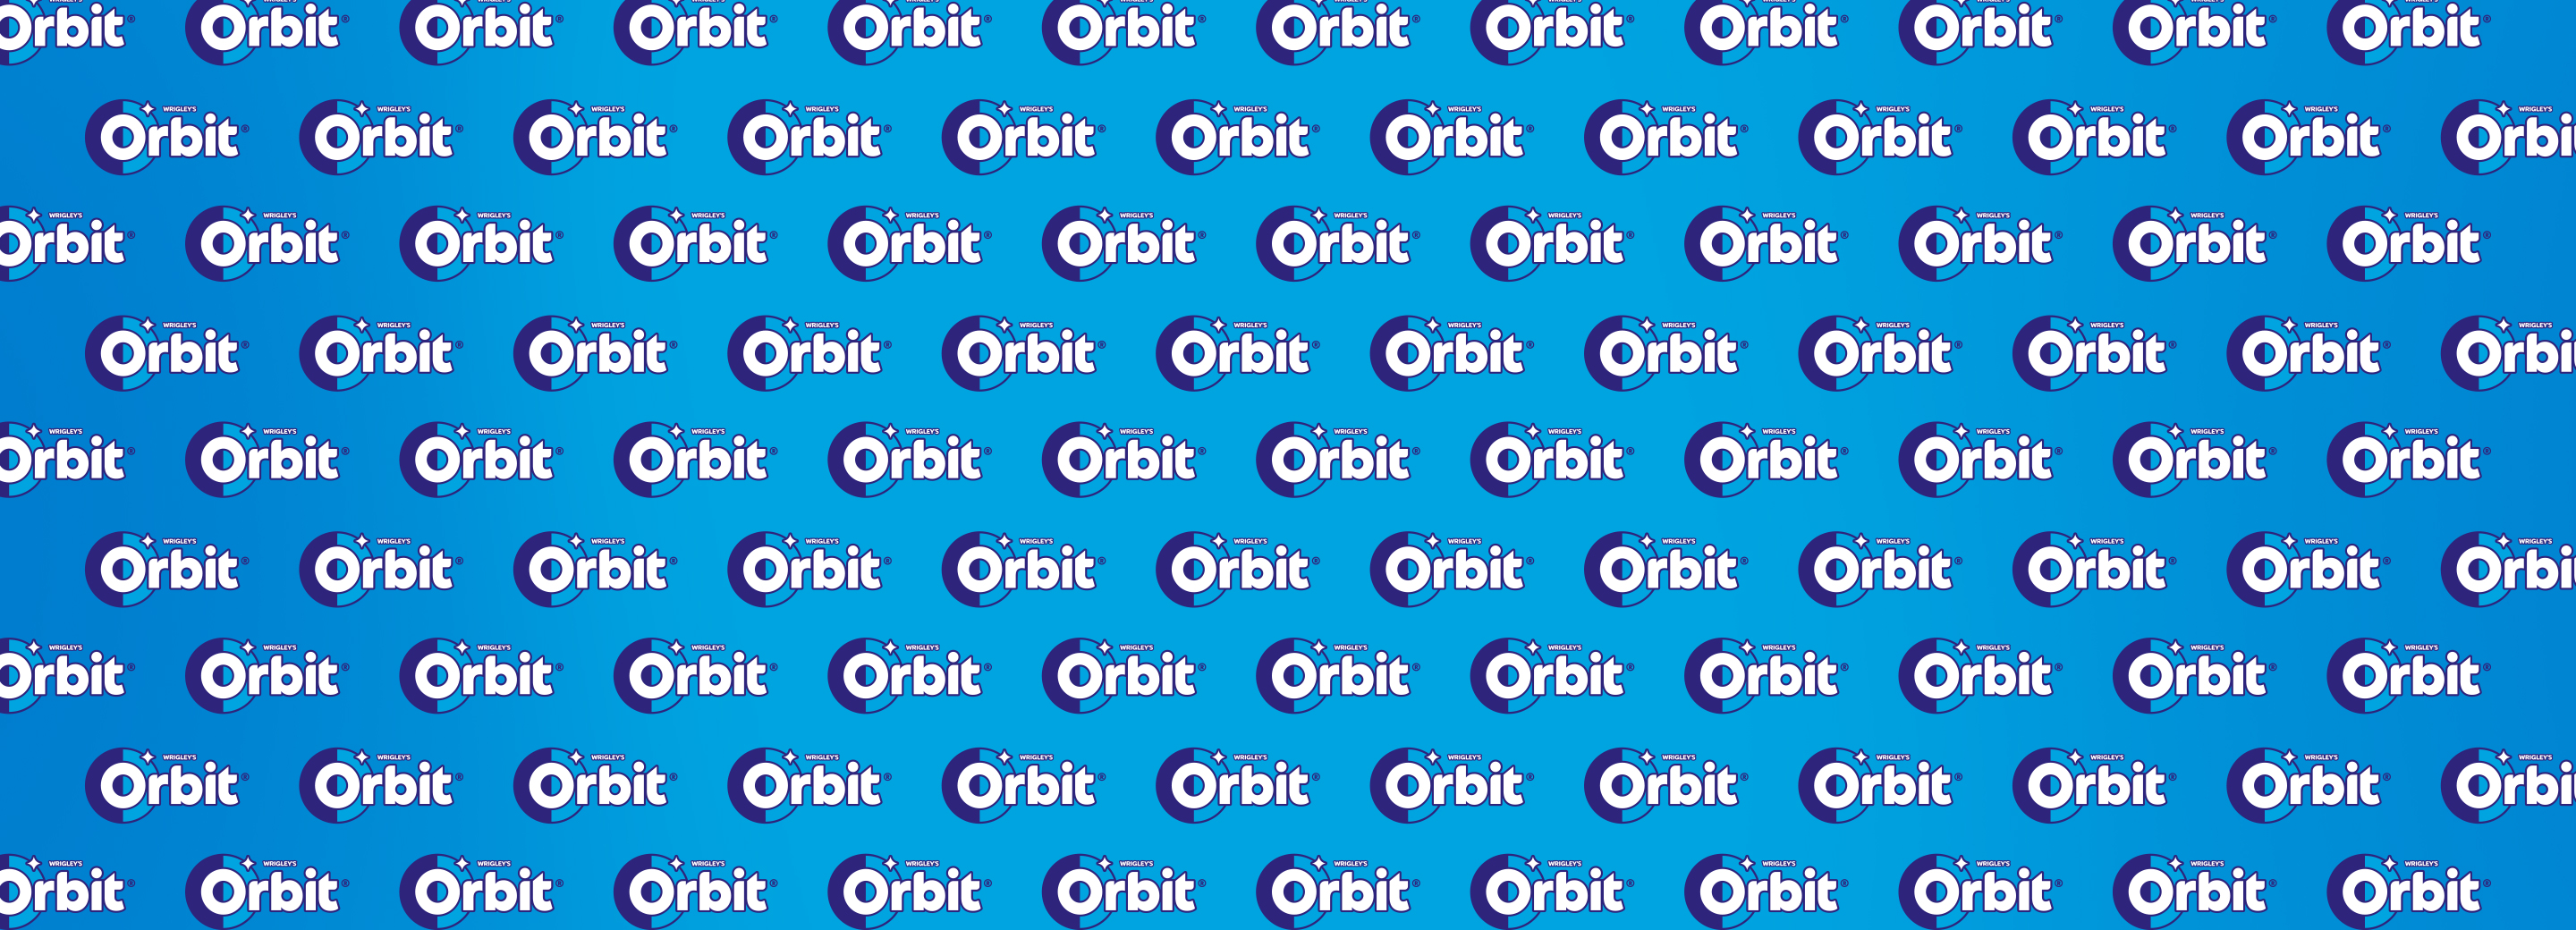 Image Orbit_PL_Logo_parallax